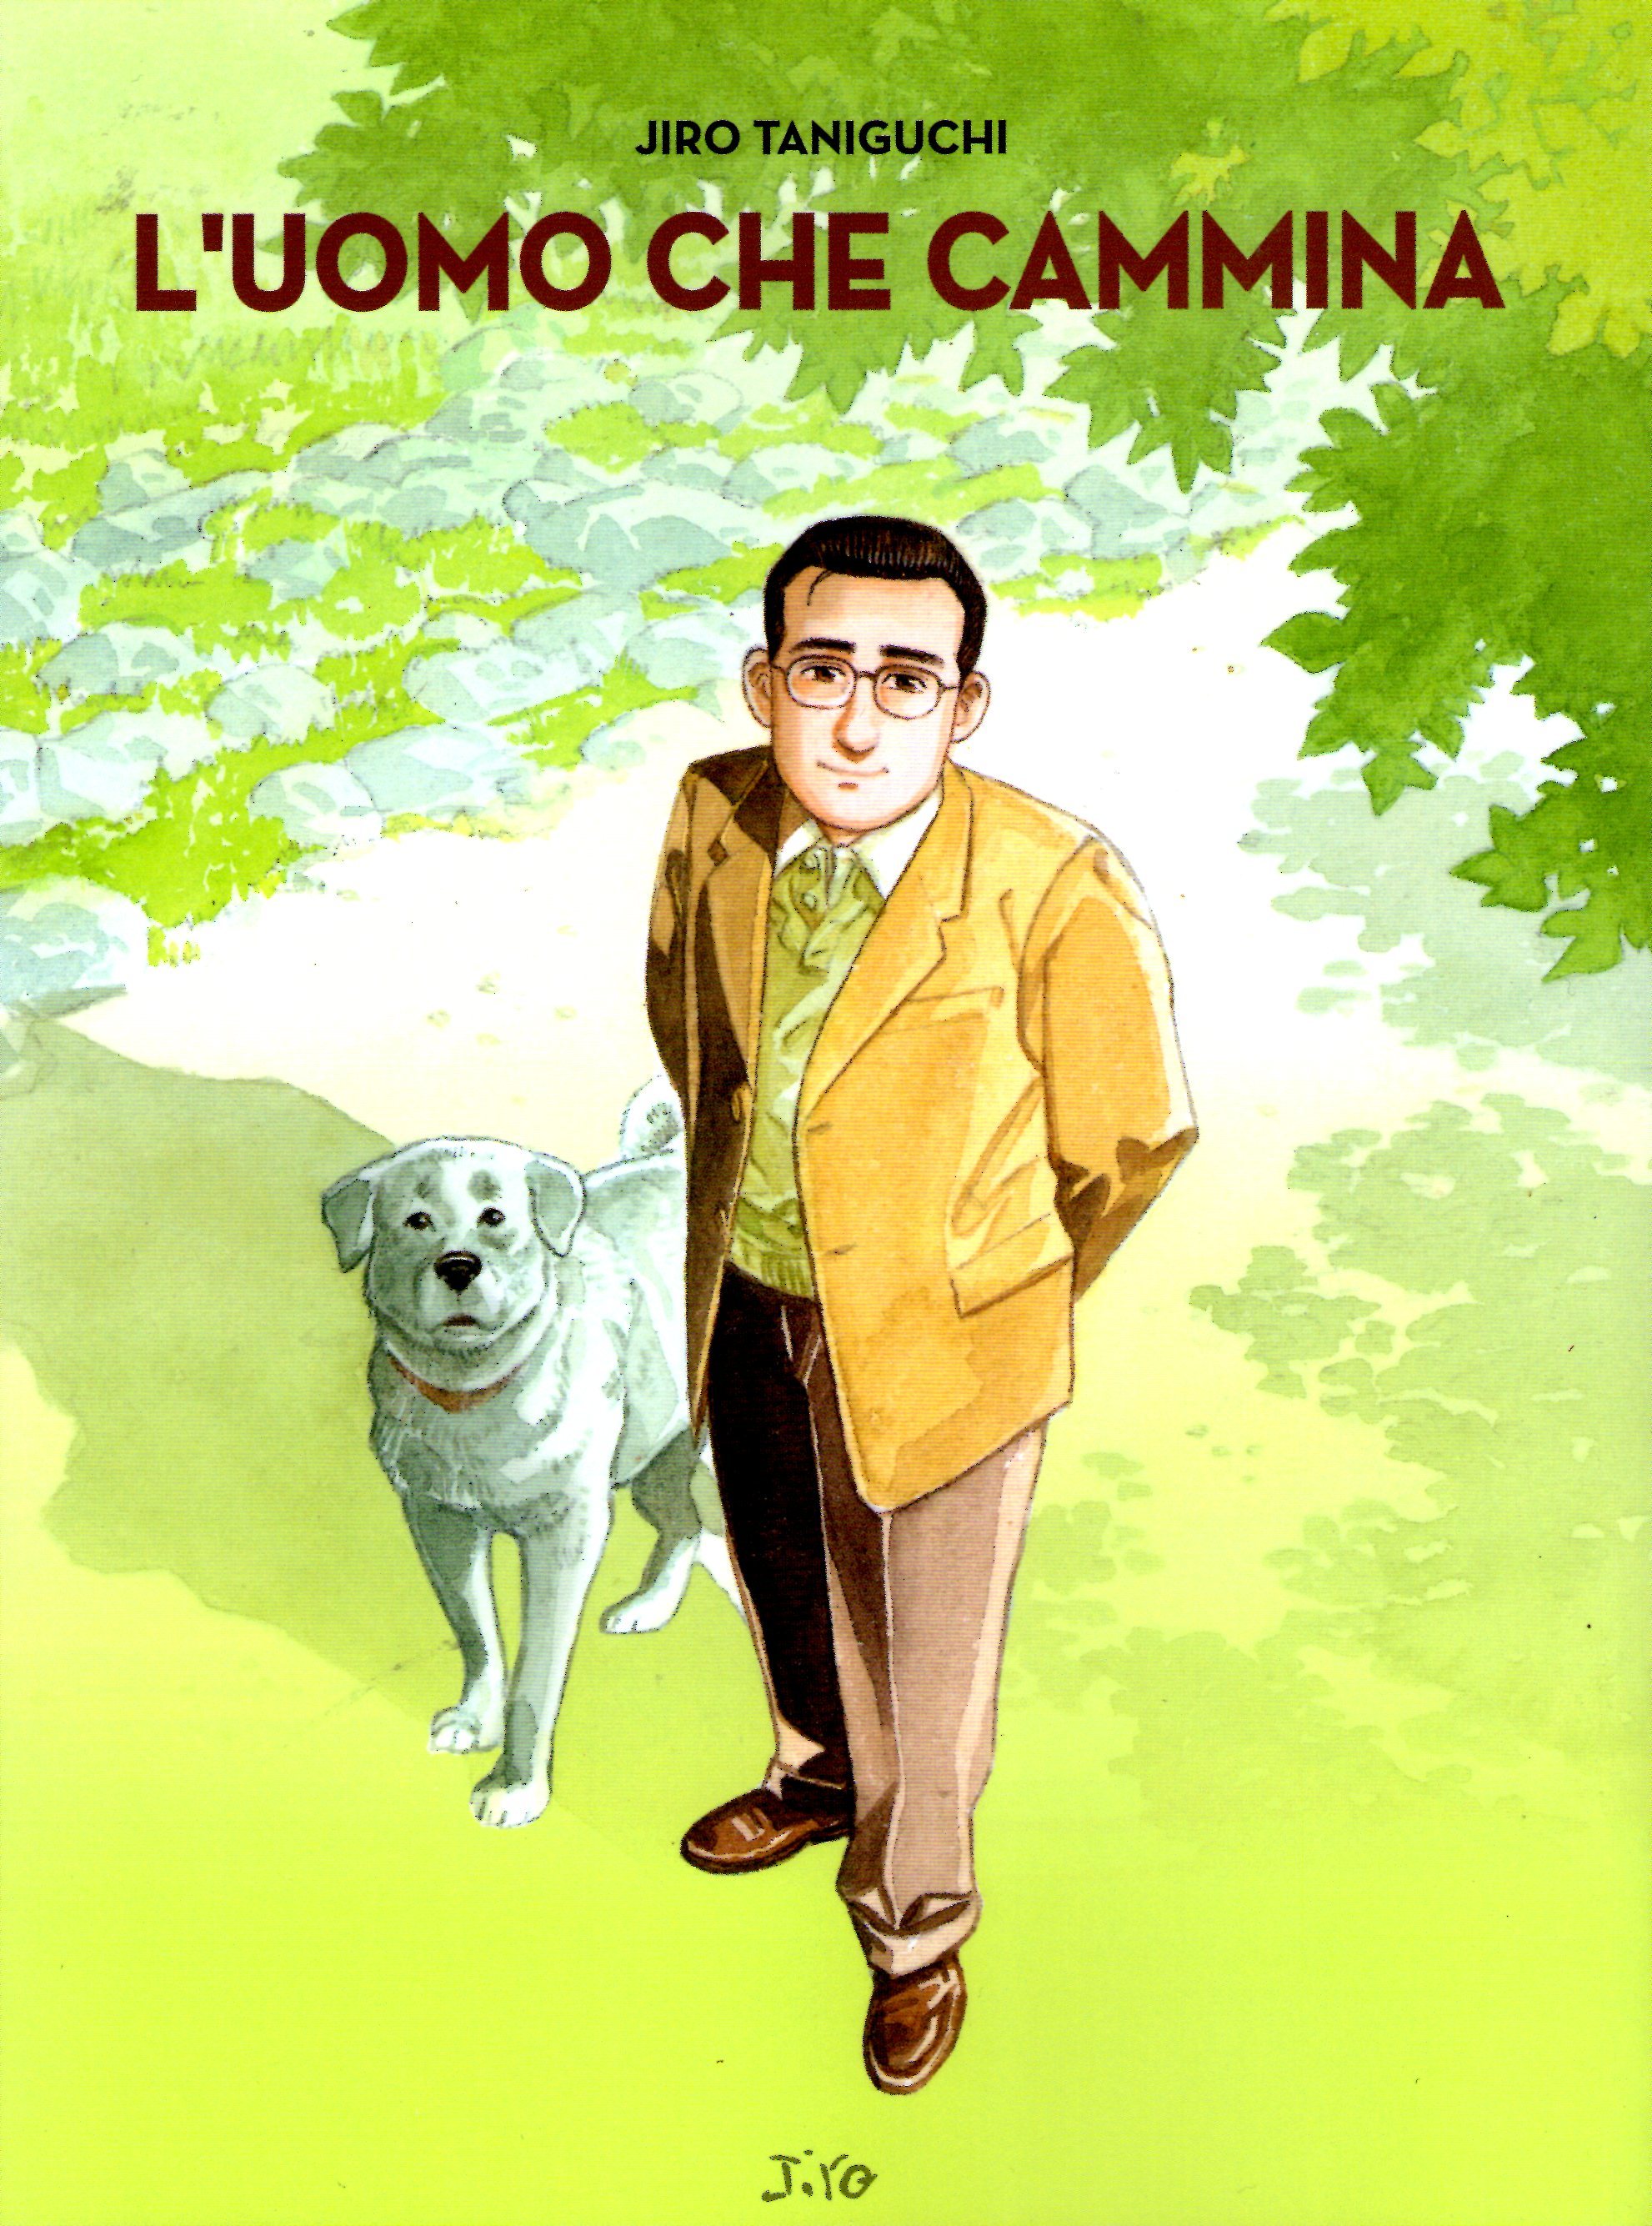 Jiro Taniguchi: L'uomo che cammina (GraphicNovel, Italian language, 2019, Panini Comics)